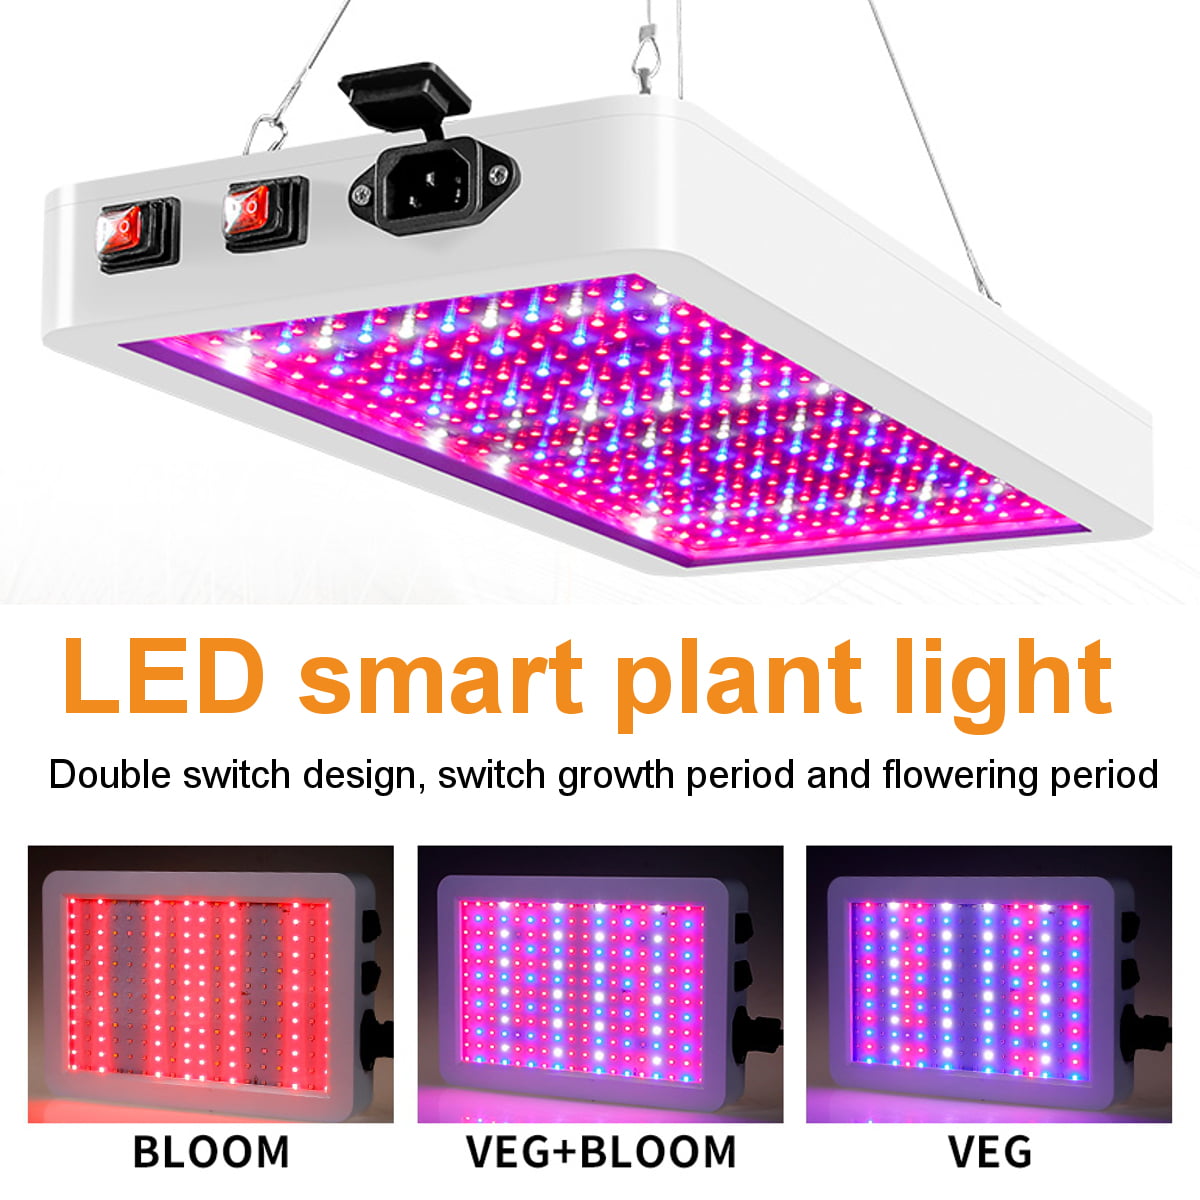 4× 300W Watt COB Led Grow Light Full Spectrum Lamp Plant Hydroponics Veg Bloom 